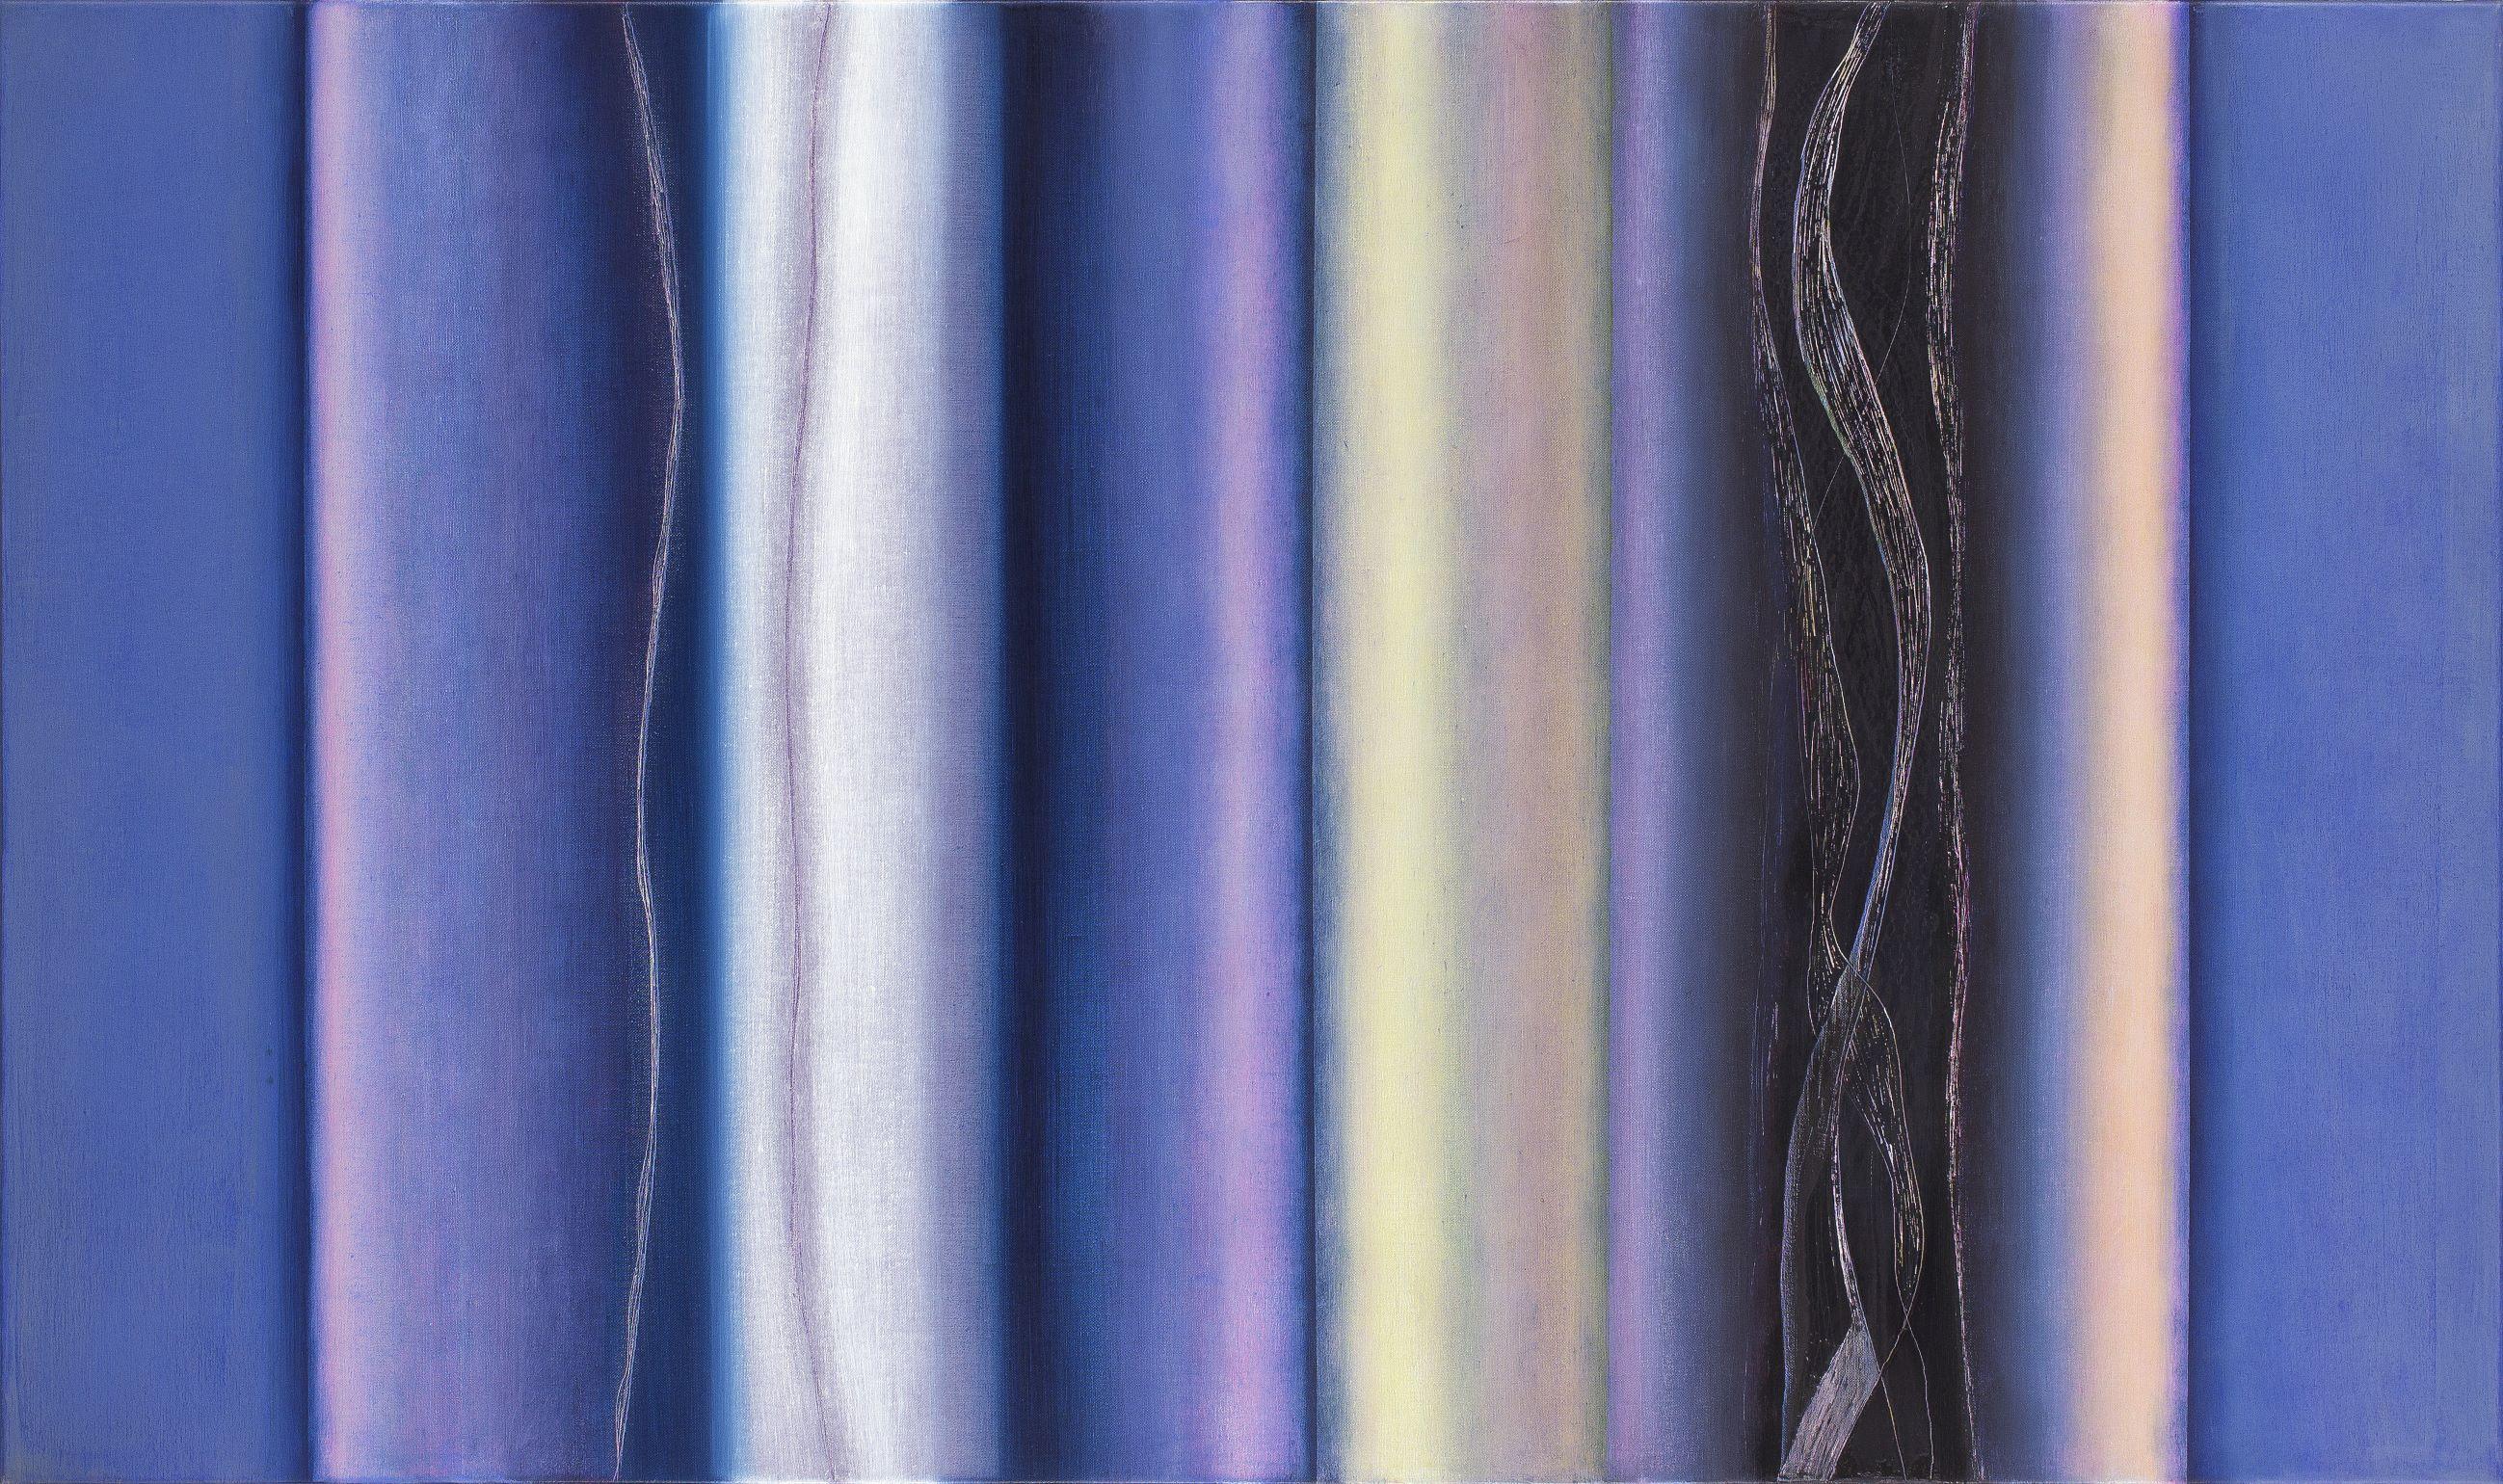 Raffaele Cioffi Abstract Painting - "Sipario" contemporary Italian abstract painting oil on canvas blue black 